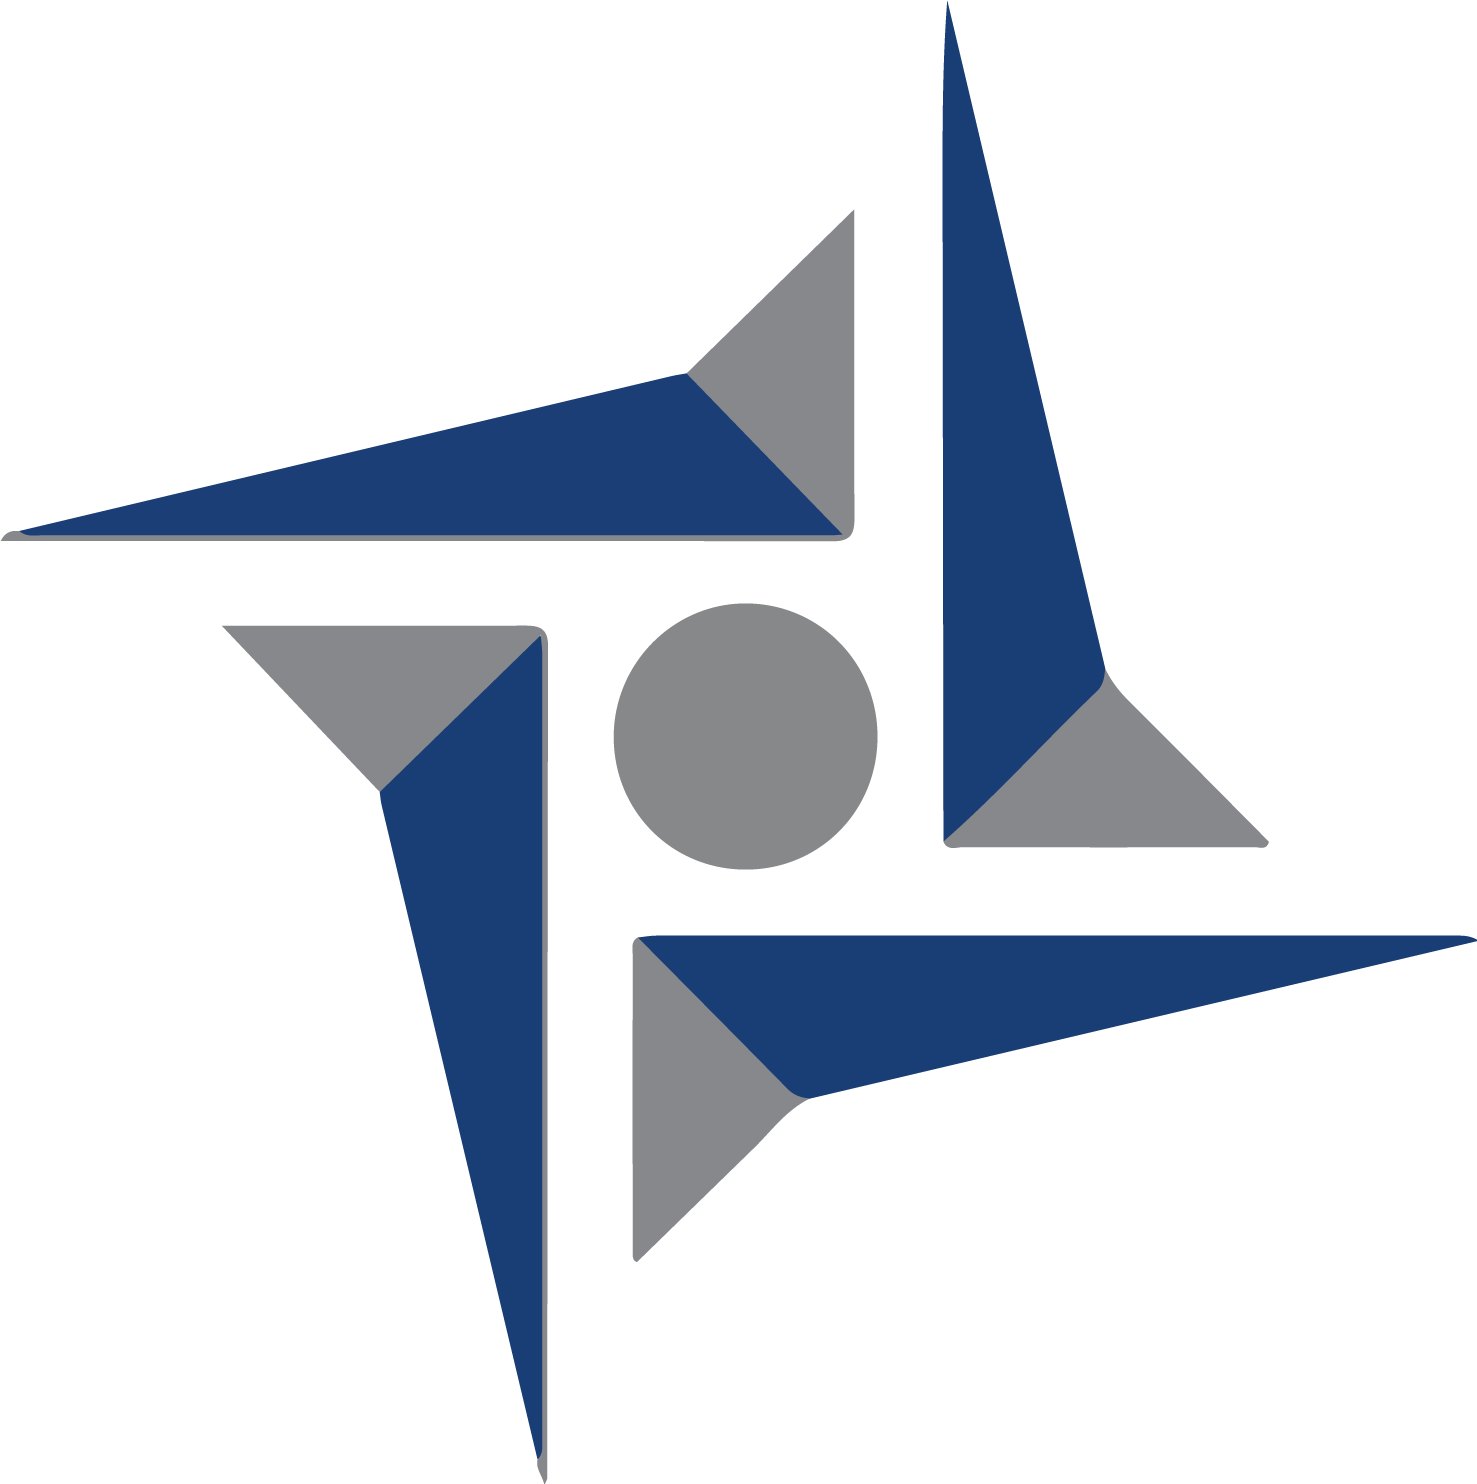 Pacific Mercantile Bancorp logo (transparent PNG)